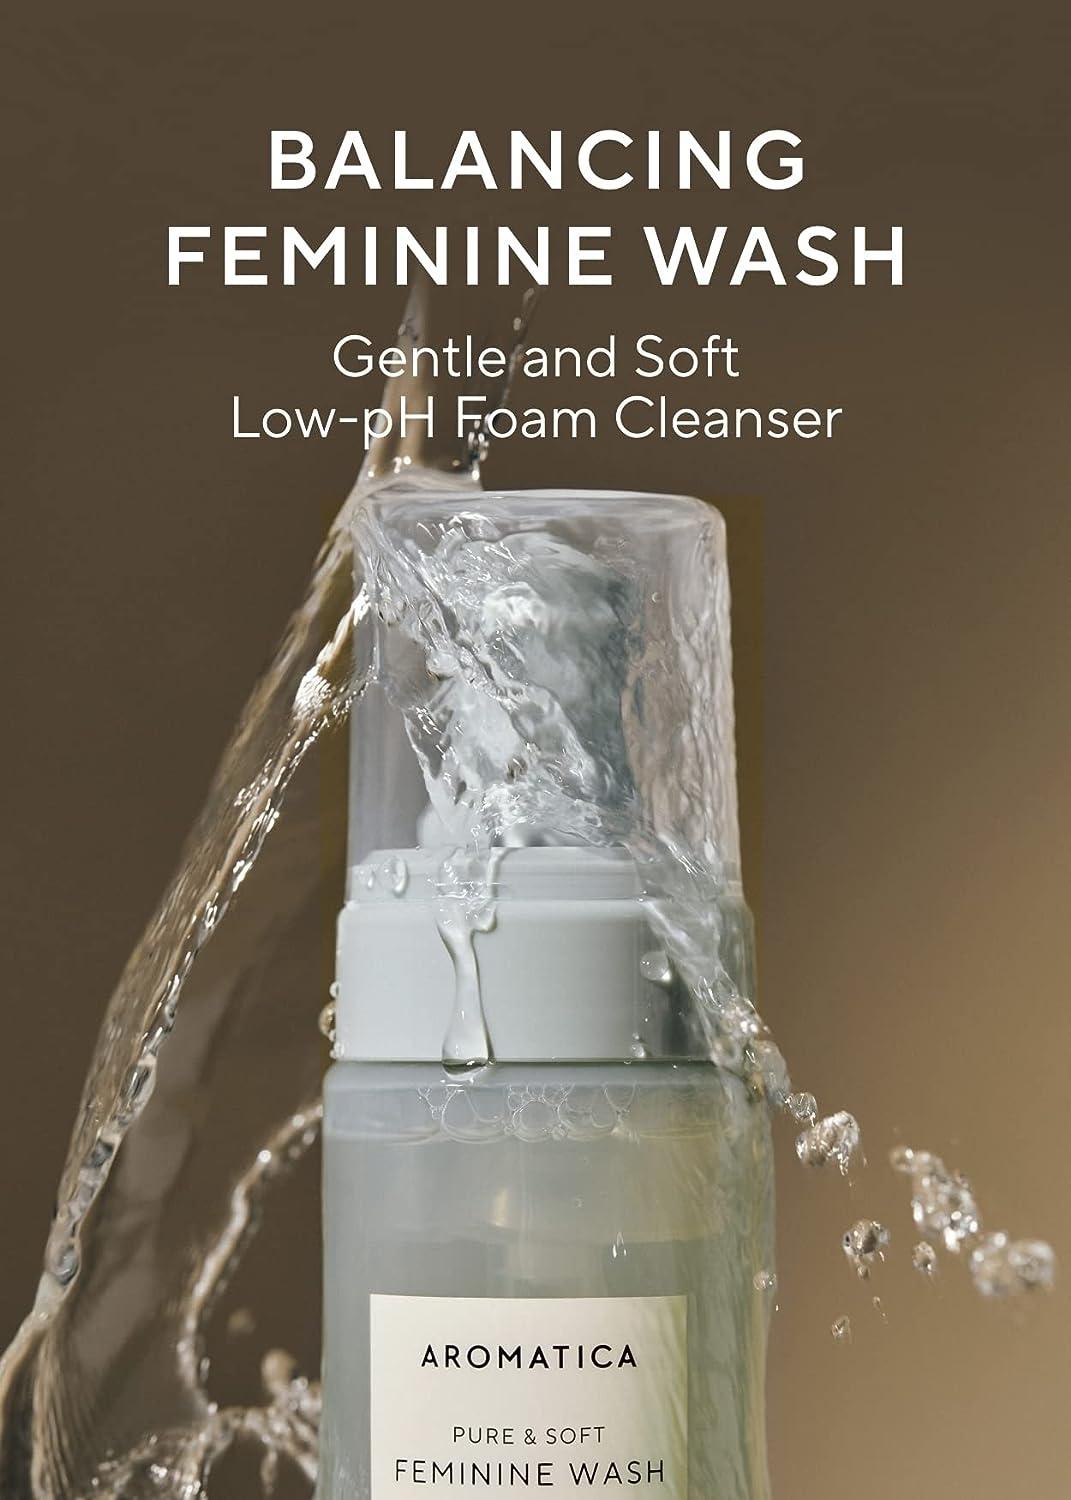 Feminine wash with Dandelion & Aloe by Aromatica